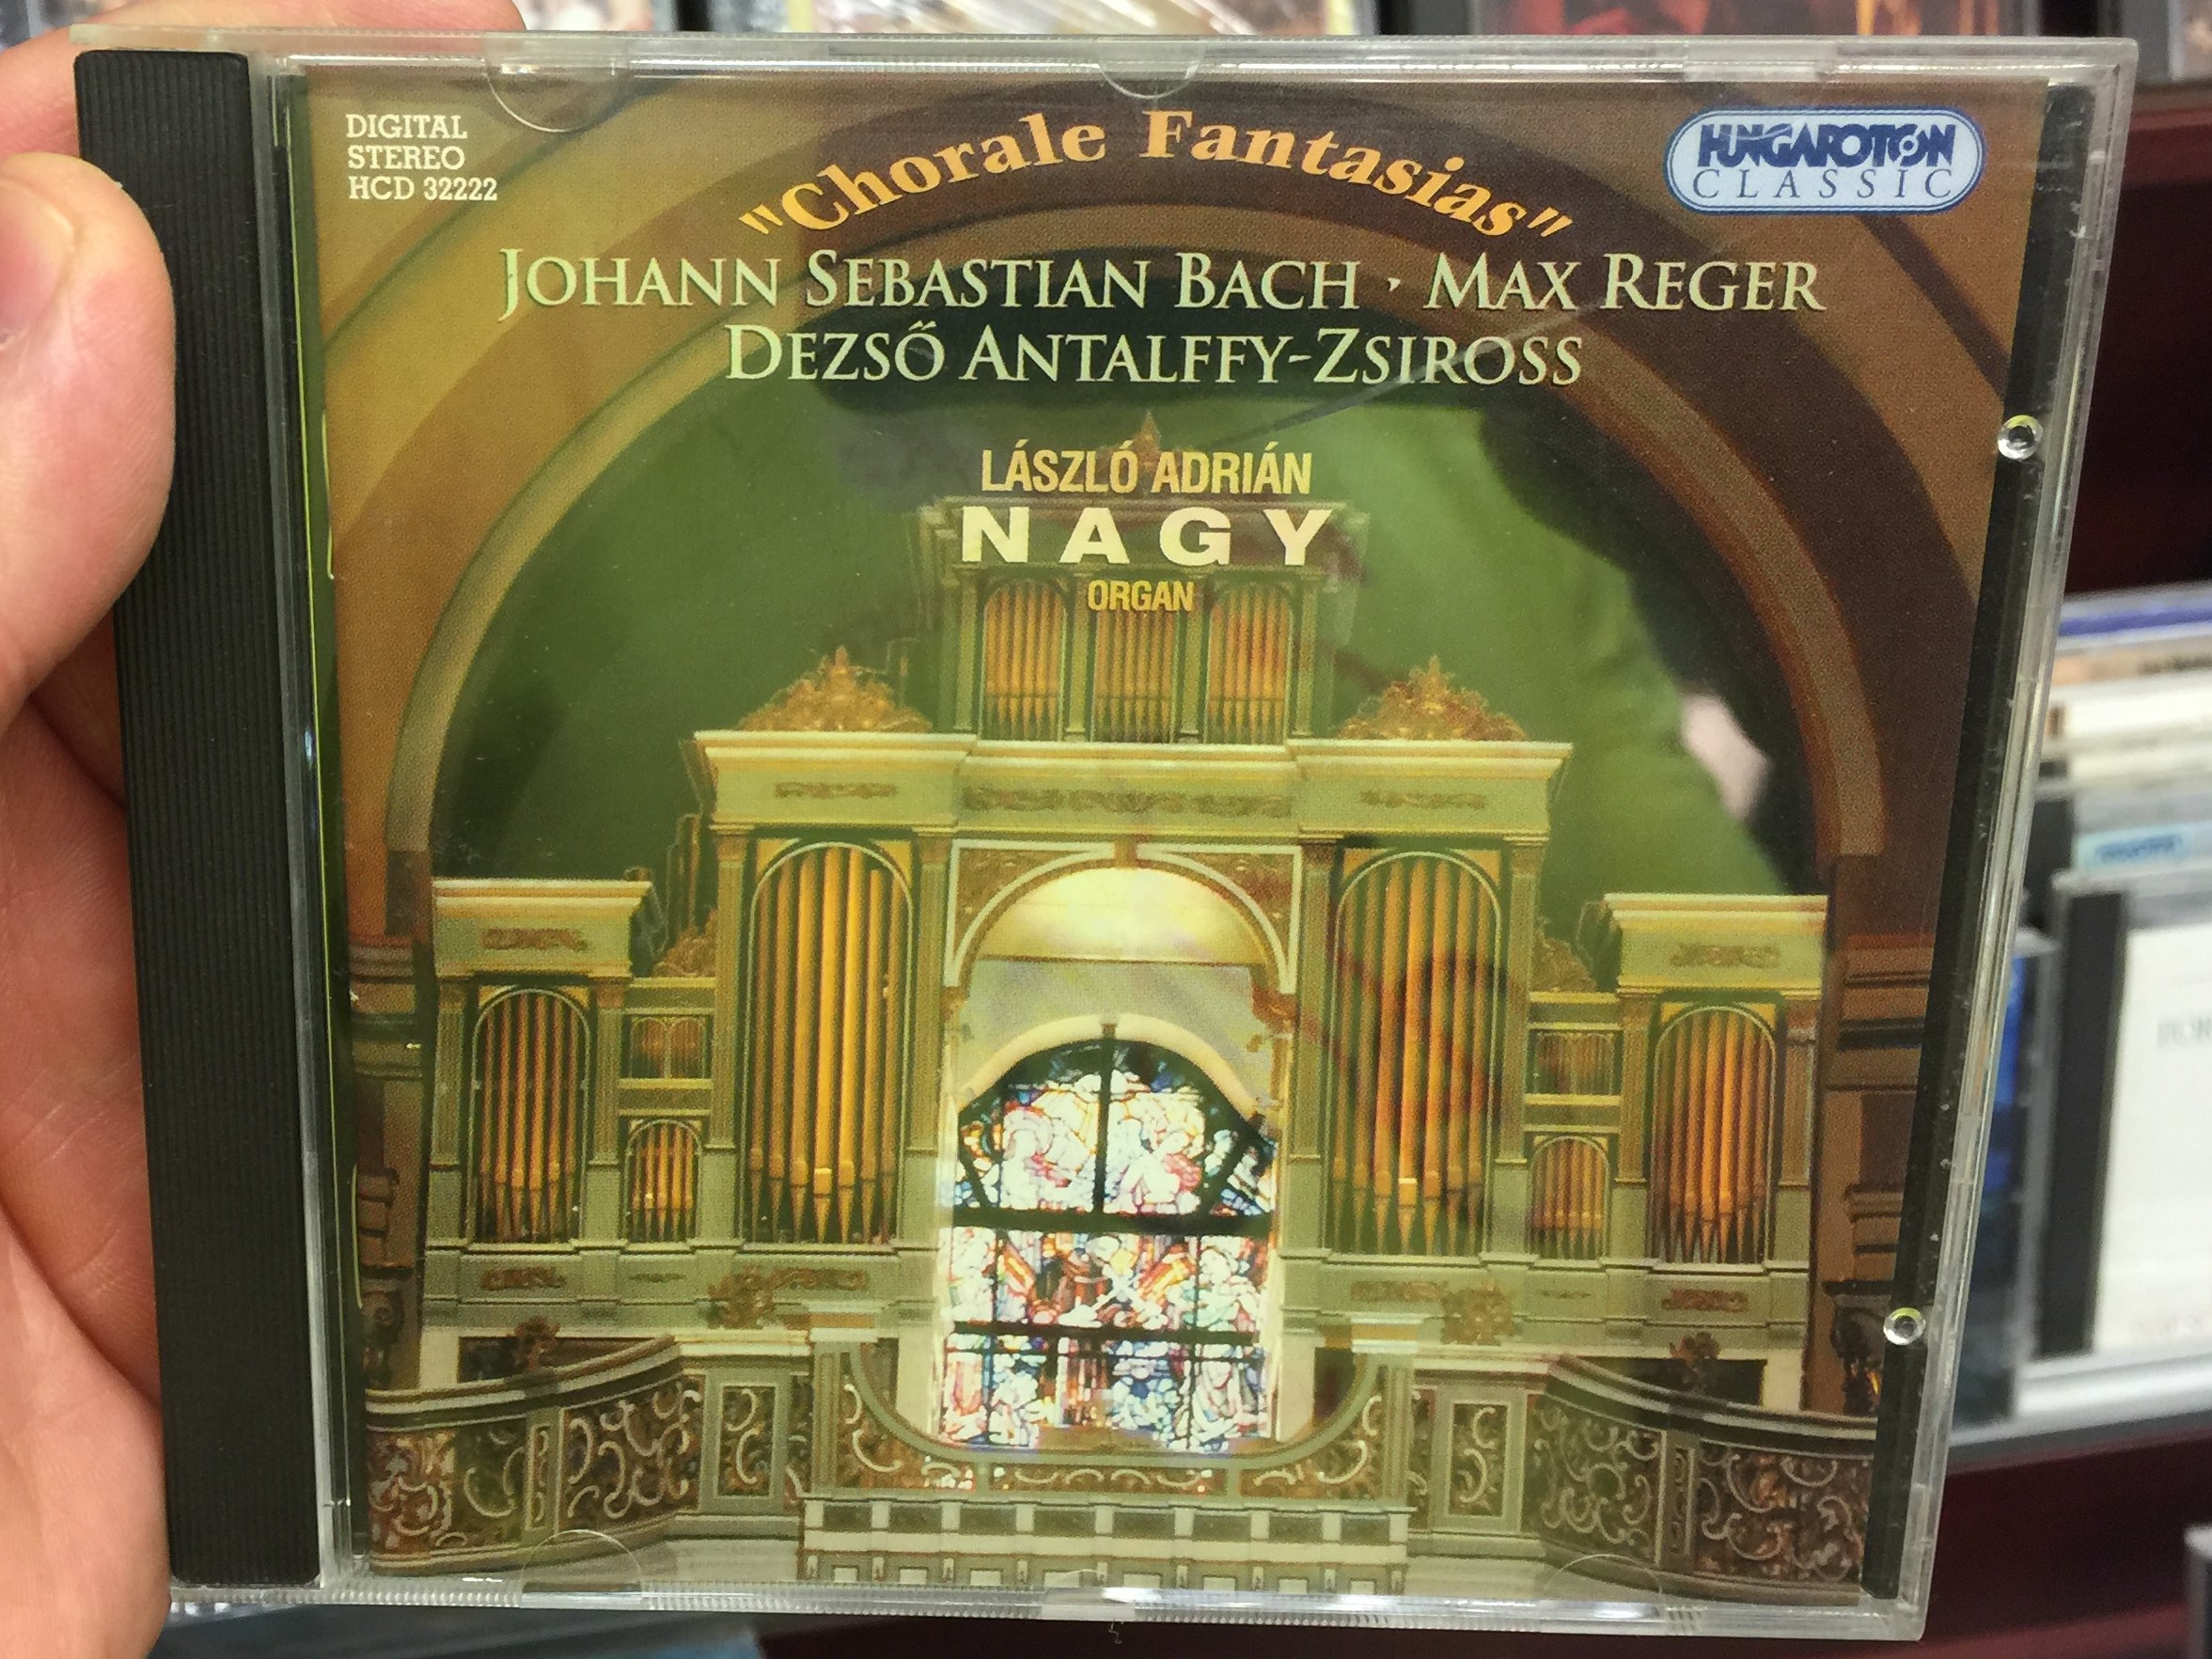 -chorale-fantasias-johan-sebastian-bach-max-reger-dezso-antalffy-zsiross-laszlo-adrian-nagy-organ-hungaroton-classic-audio-cd-2003-stereo-hcd-32222-1-.jpg